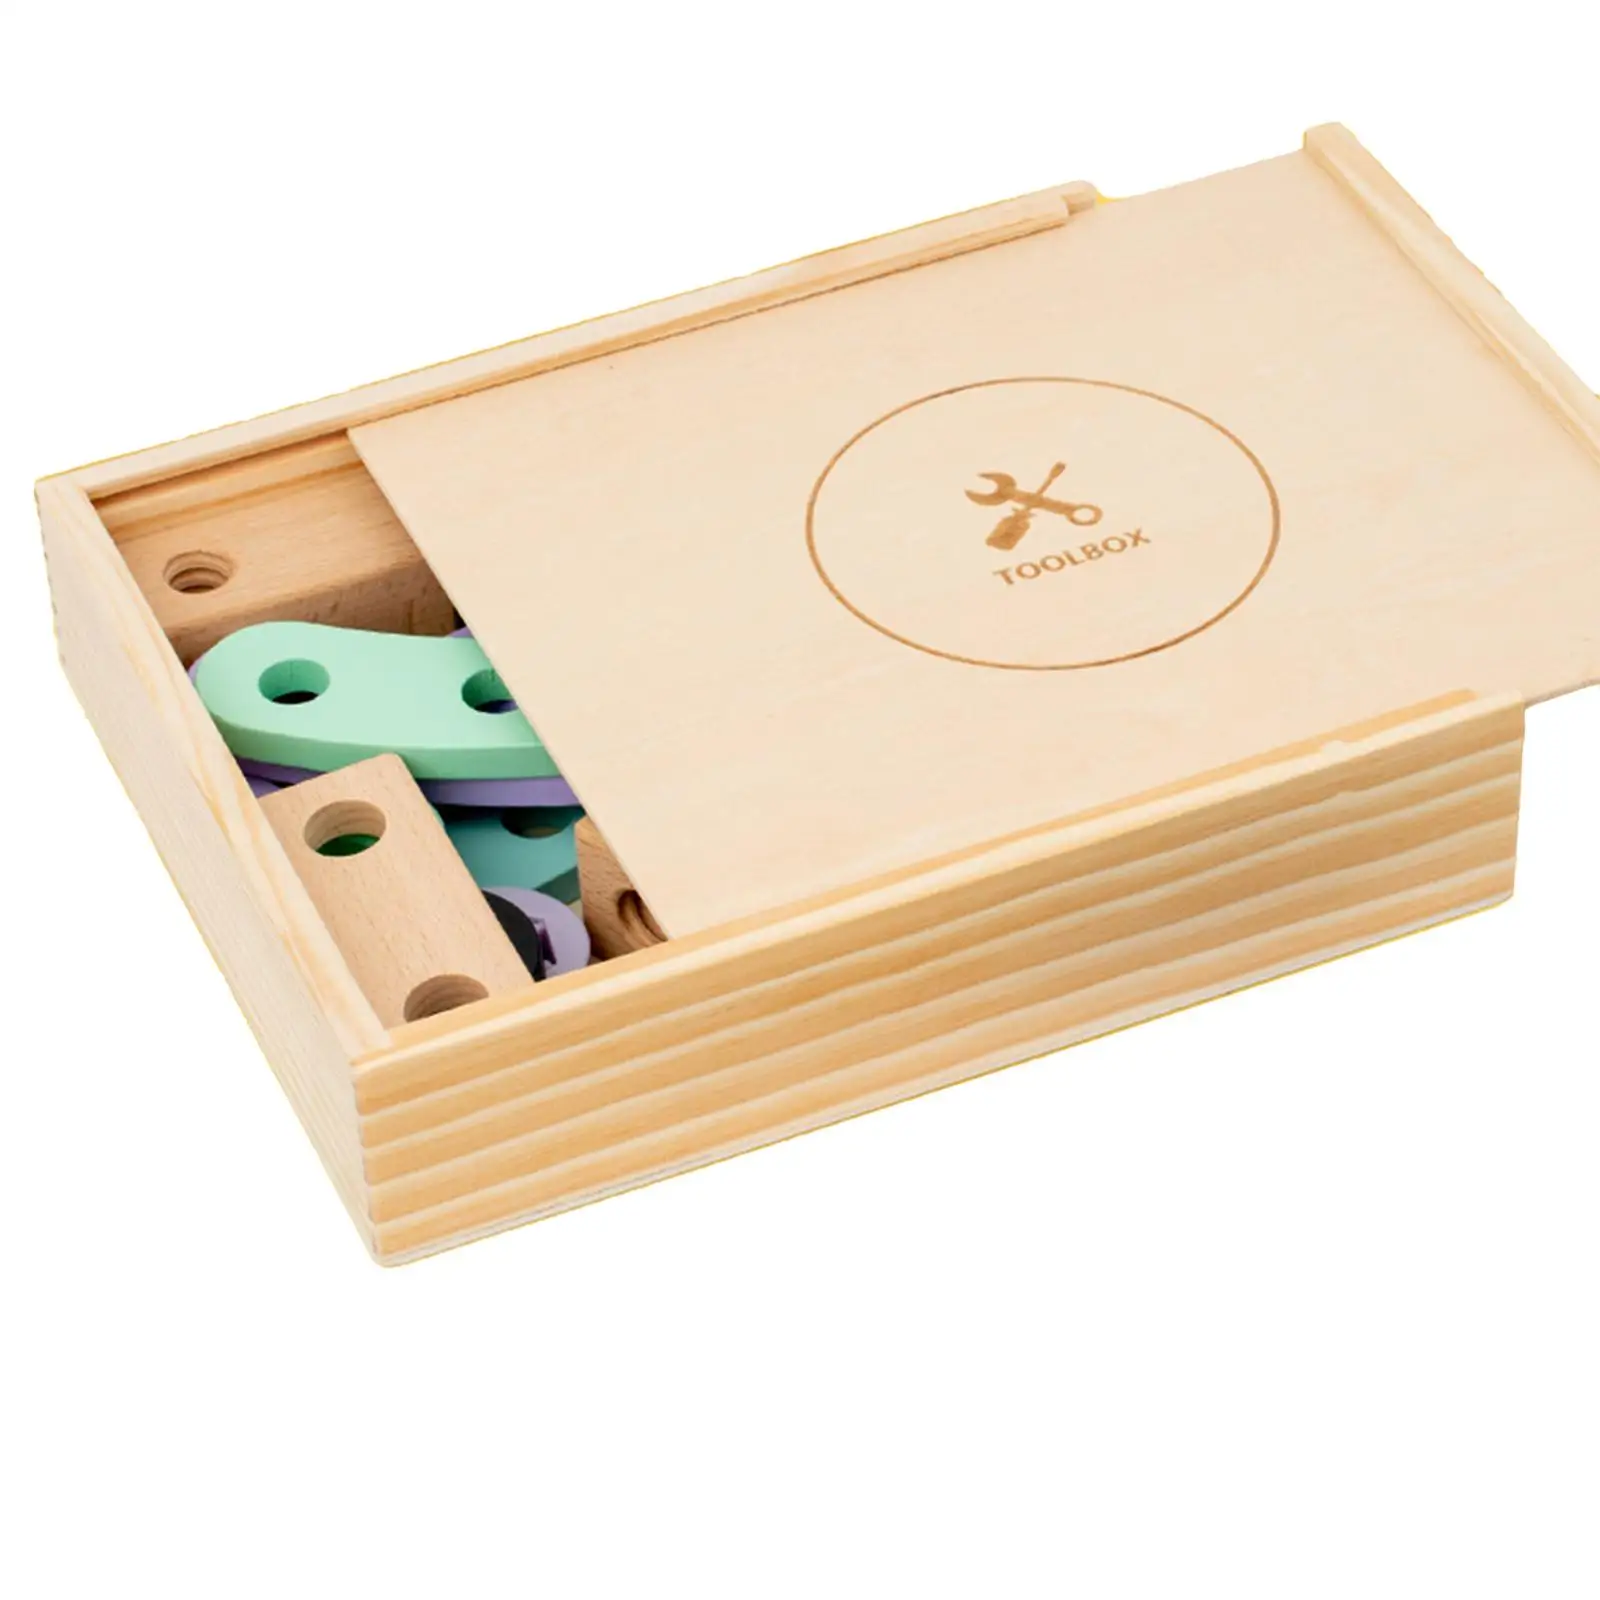 Wooden Repair Tool Box Toy Educational Toy Multifunctional Creative Sturdy DIY Montessori for Baby Children Teens Preschool